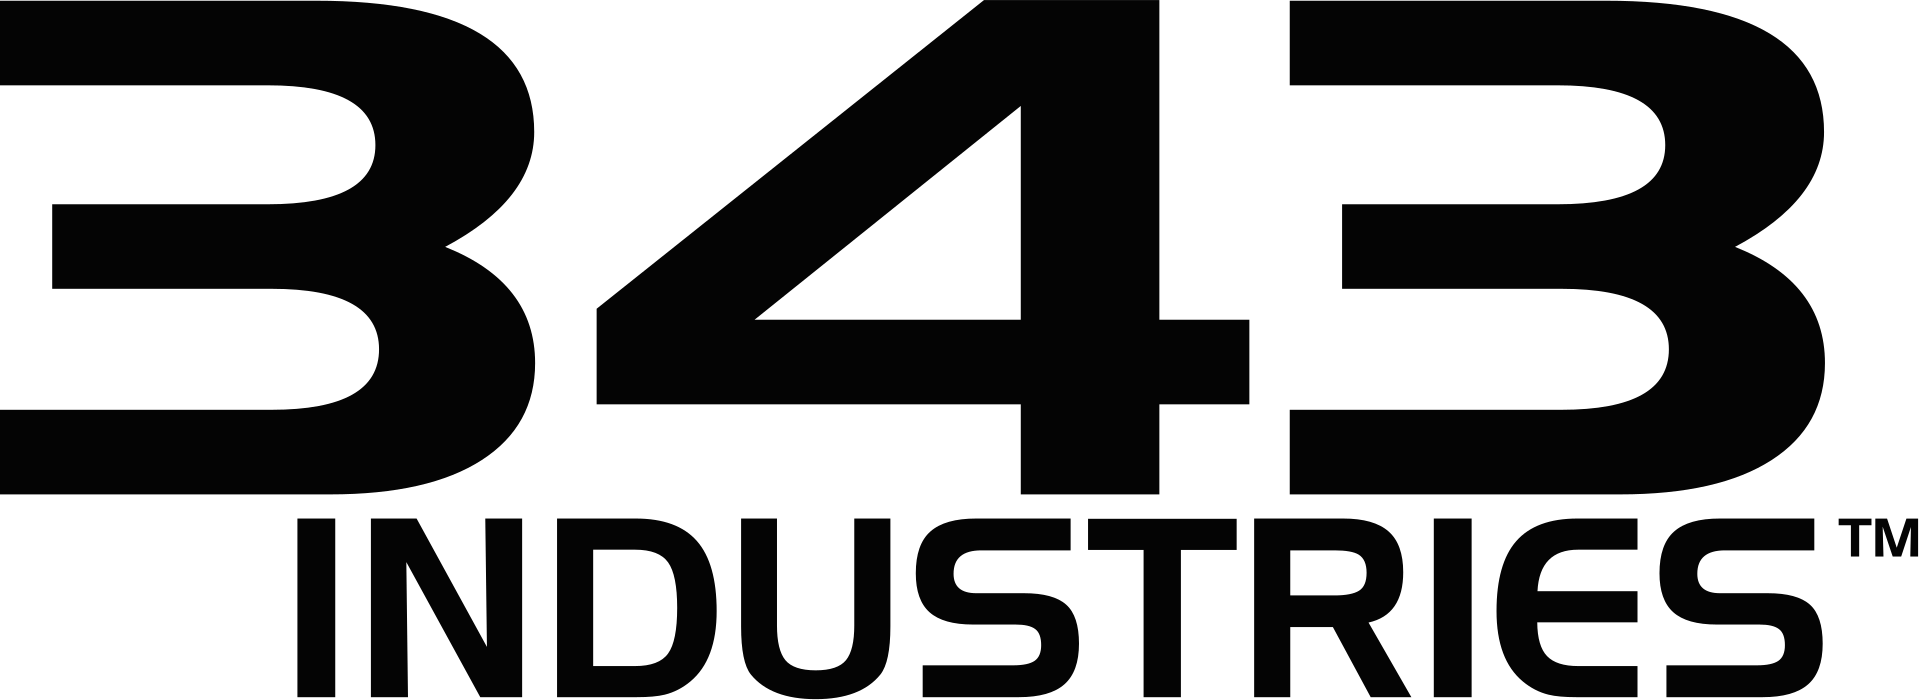 343 Industries - logo svg